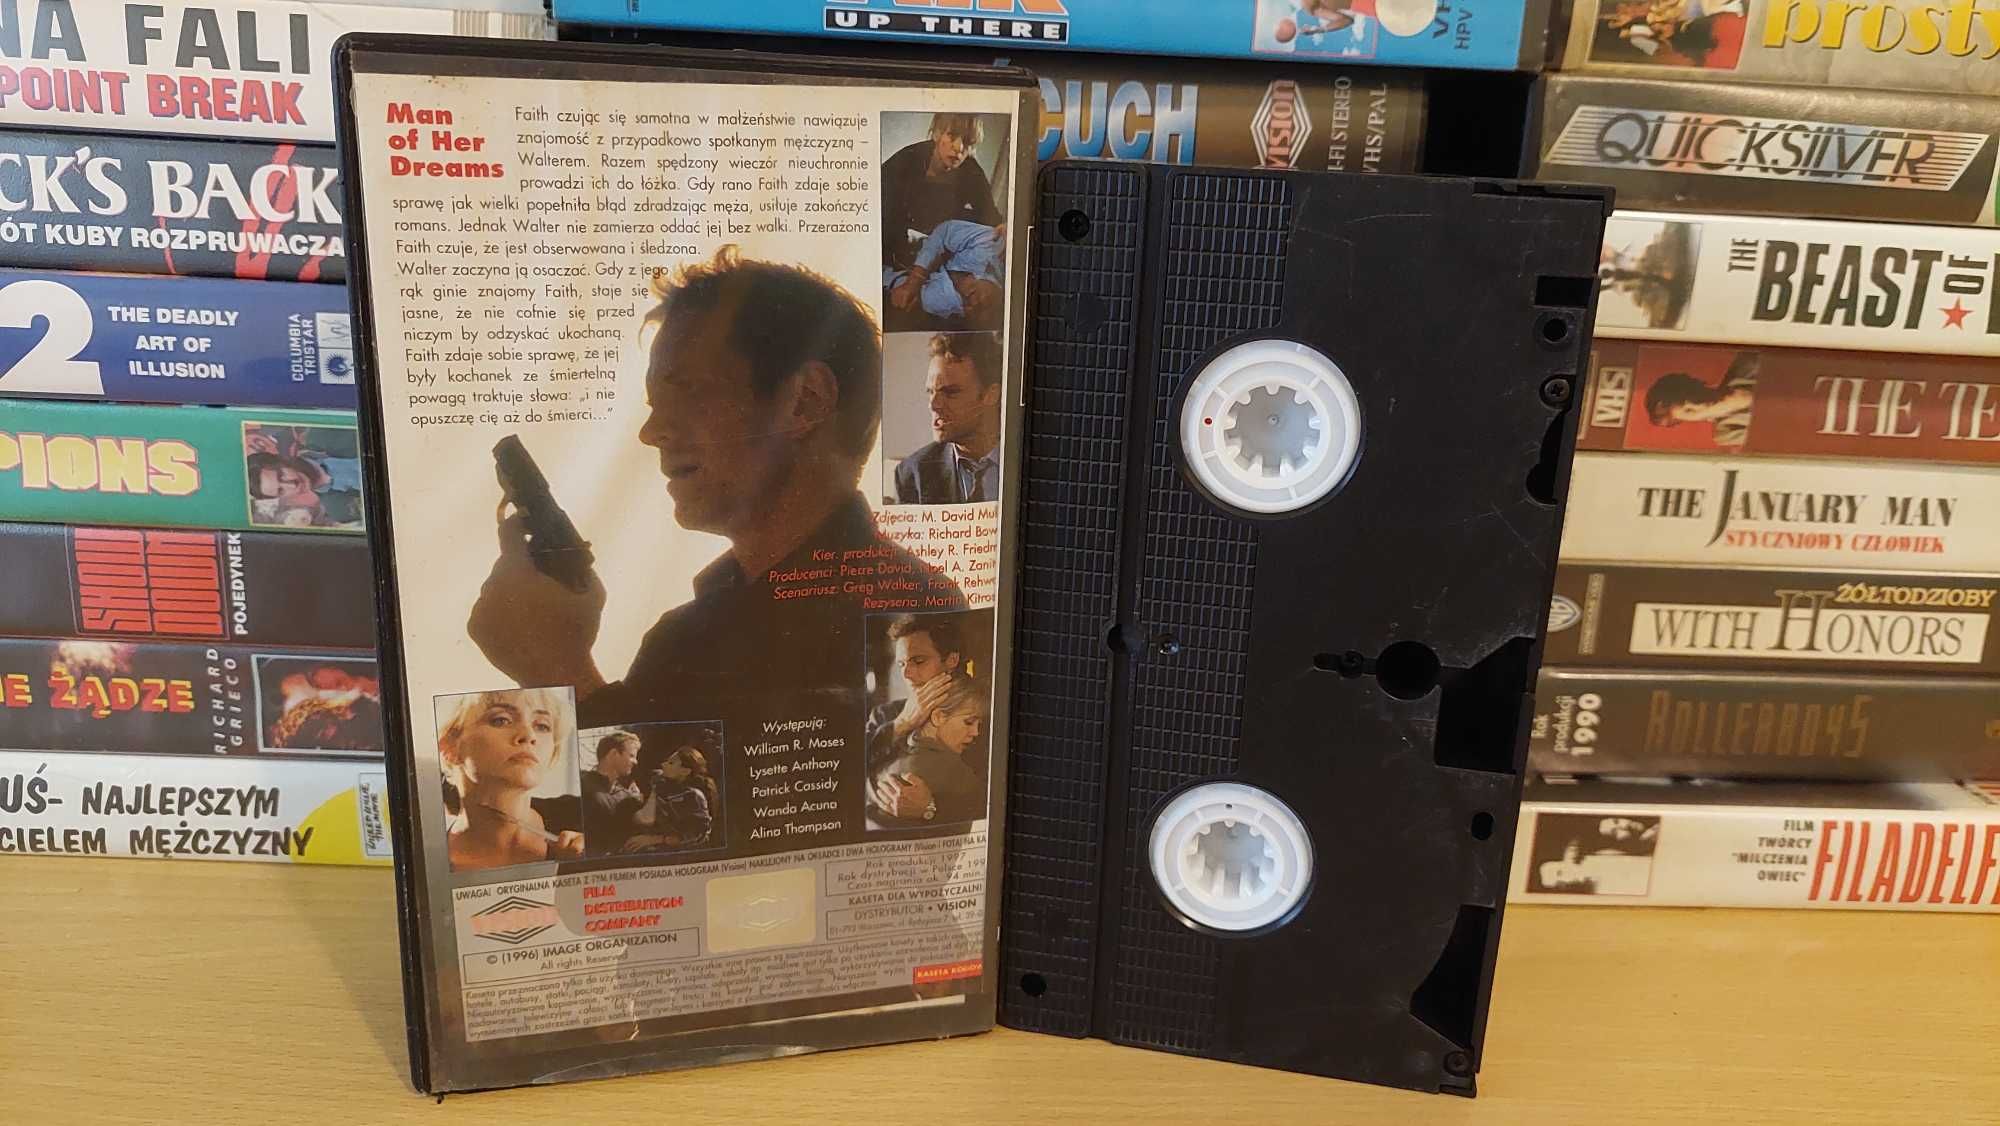 Aż Po Grób - (Man of Her Dreams) - VHS